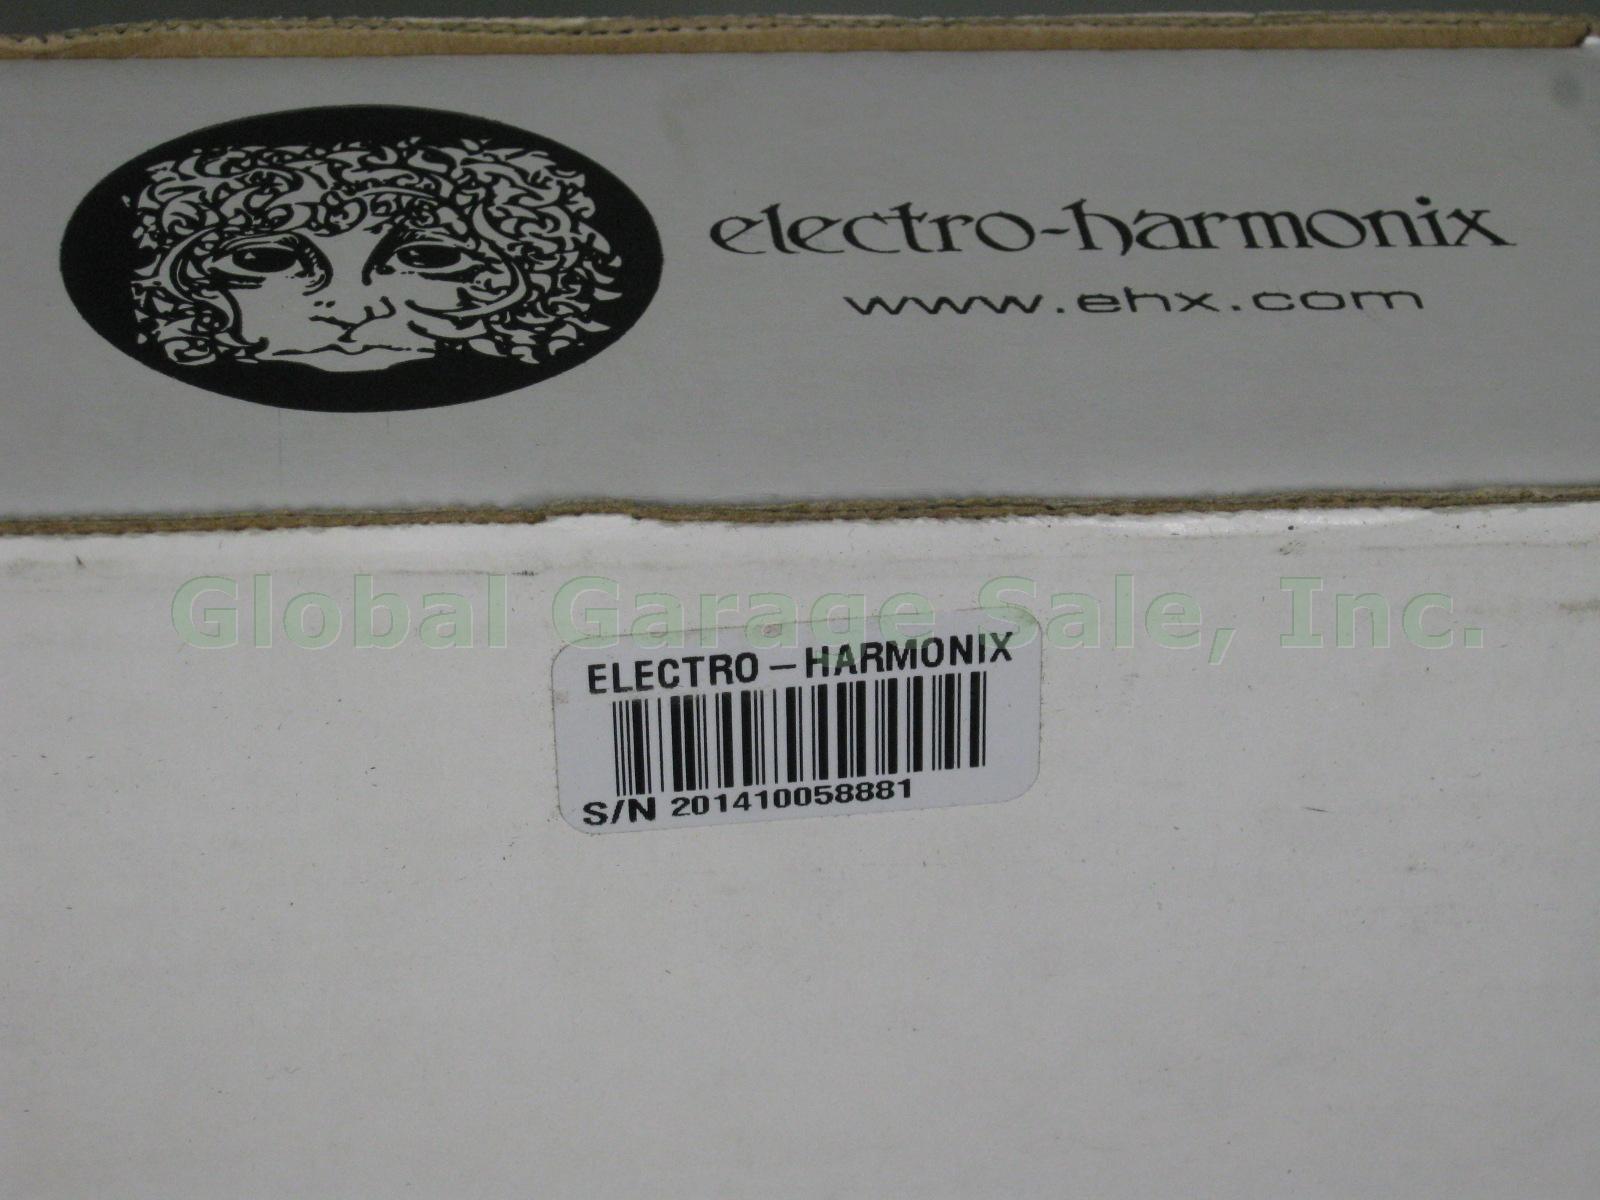 MIB Electro-Harmonix 8 Step Program Analog Expression CV Sequencer Never Used NR 7